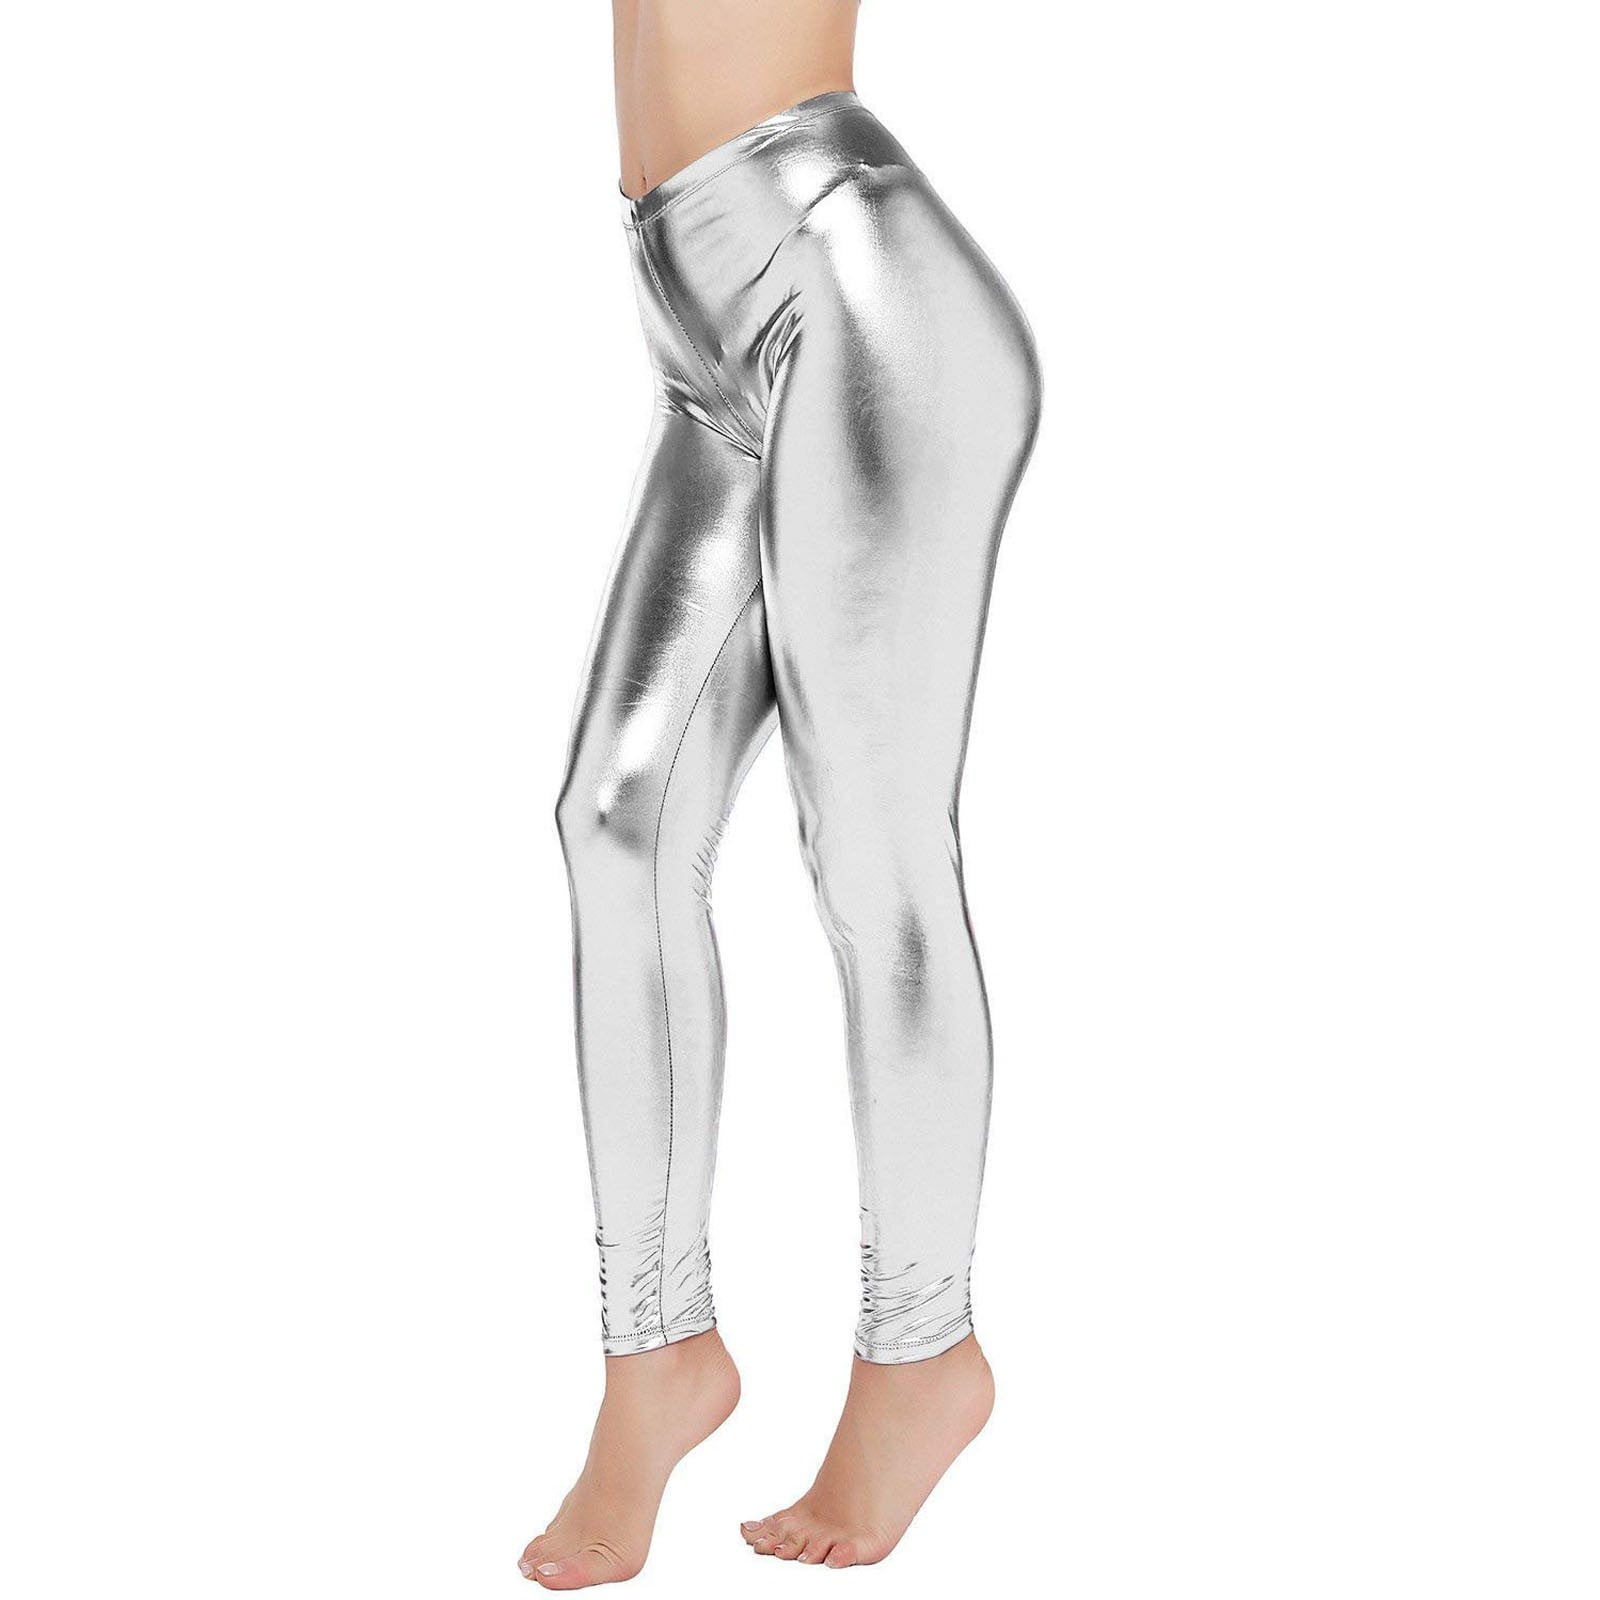 MRULIC pants for women Waist Look Womens Leggings Shiny Wet